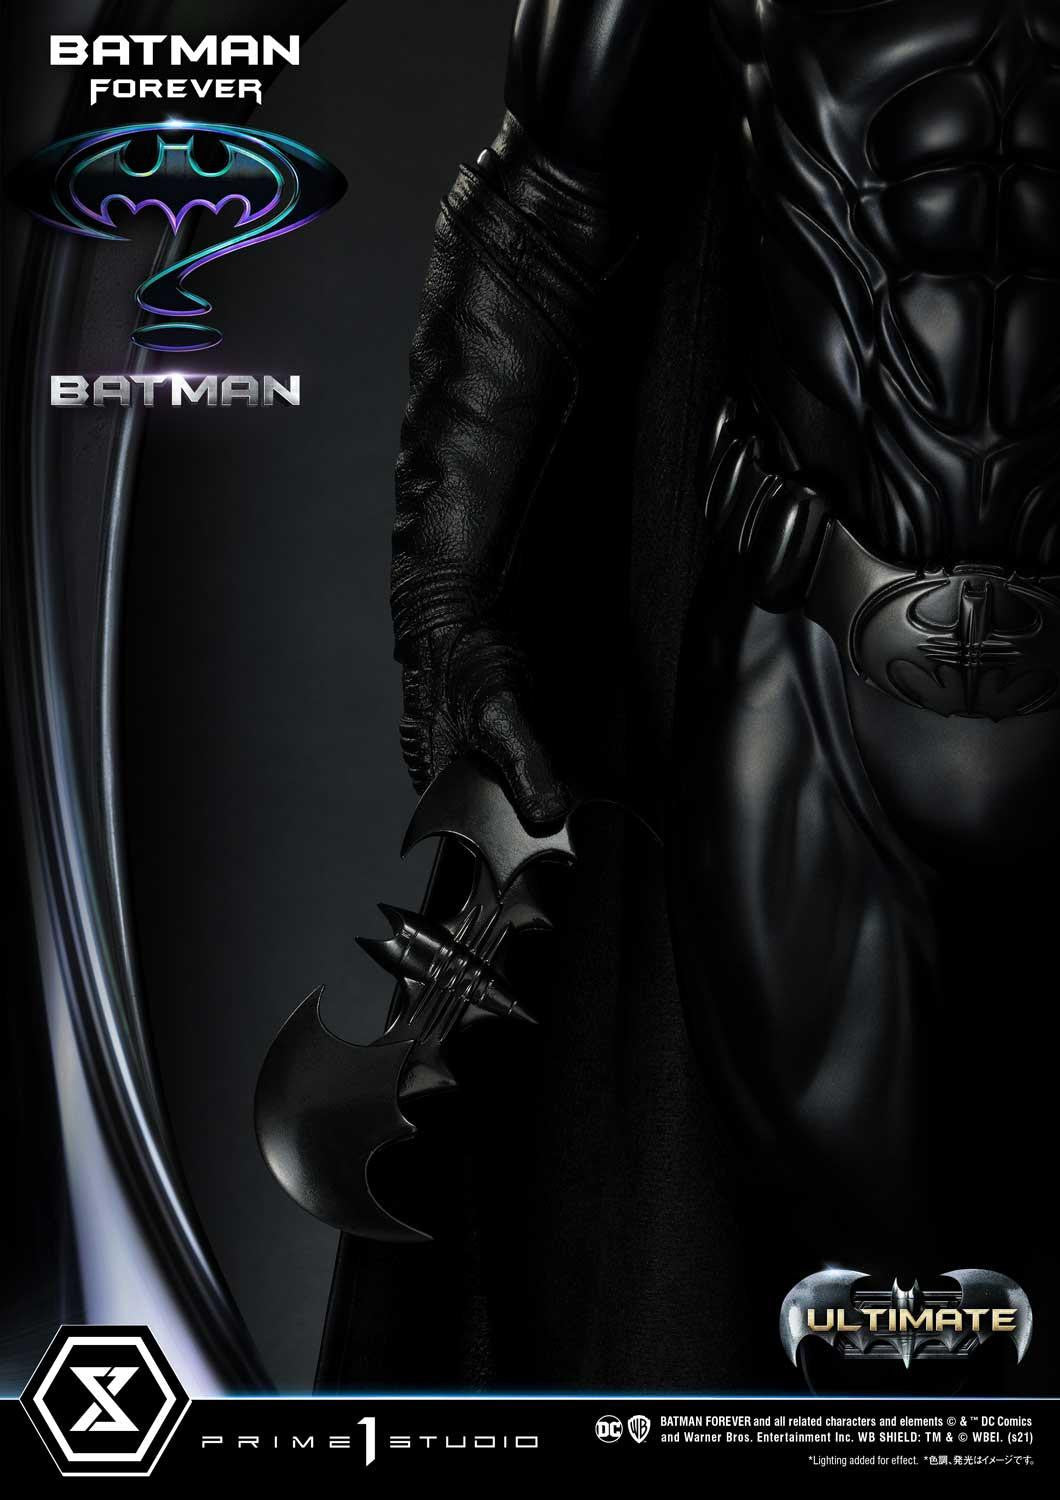 PRIME 1 STUDIO BATMAN FOREVER BATMAN (ULTIMATE BONUS VERSION) MMBM-01UTS - Anotoys Collectibles